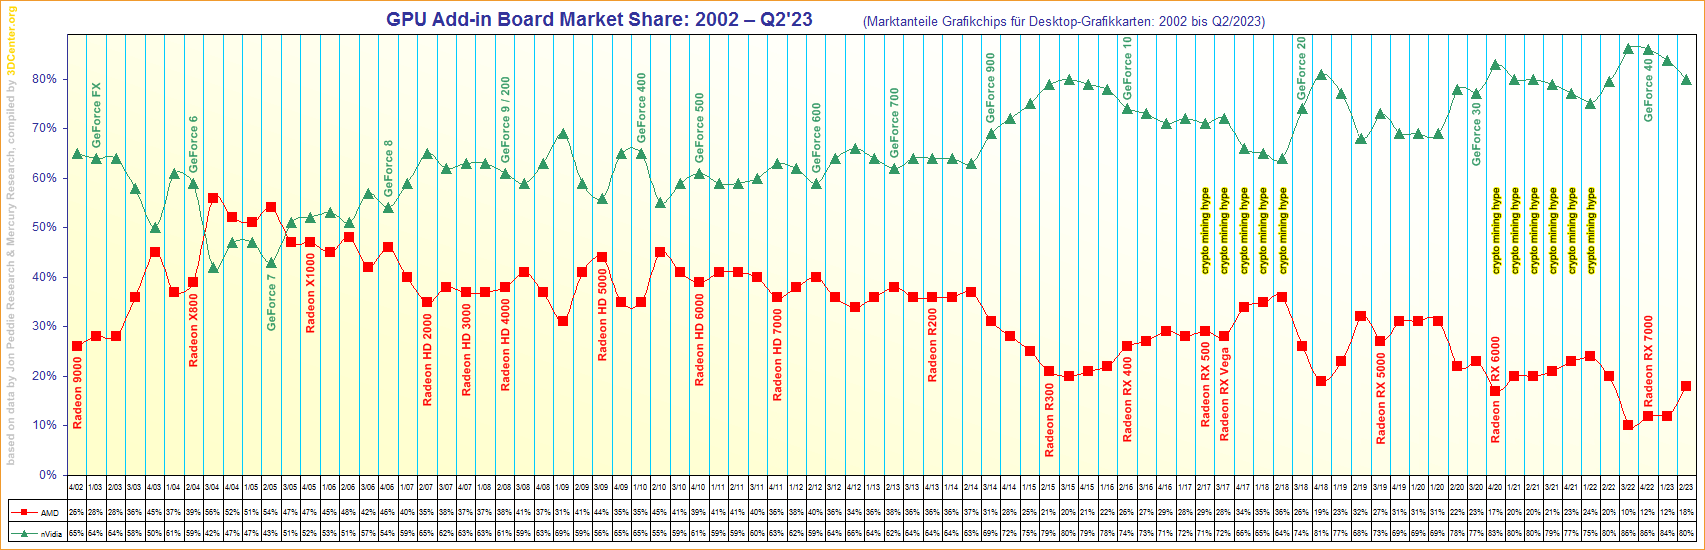 GPU-Add-in-Board-Market-Share-2002-to-Q2-2023.png